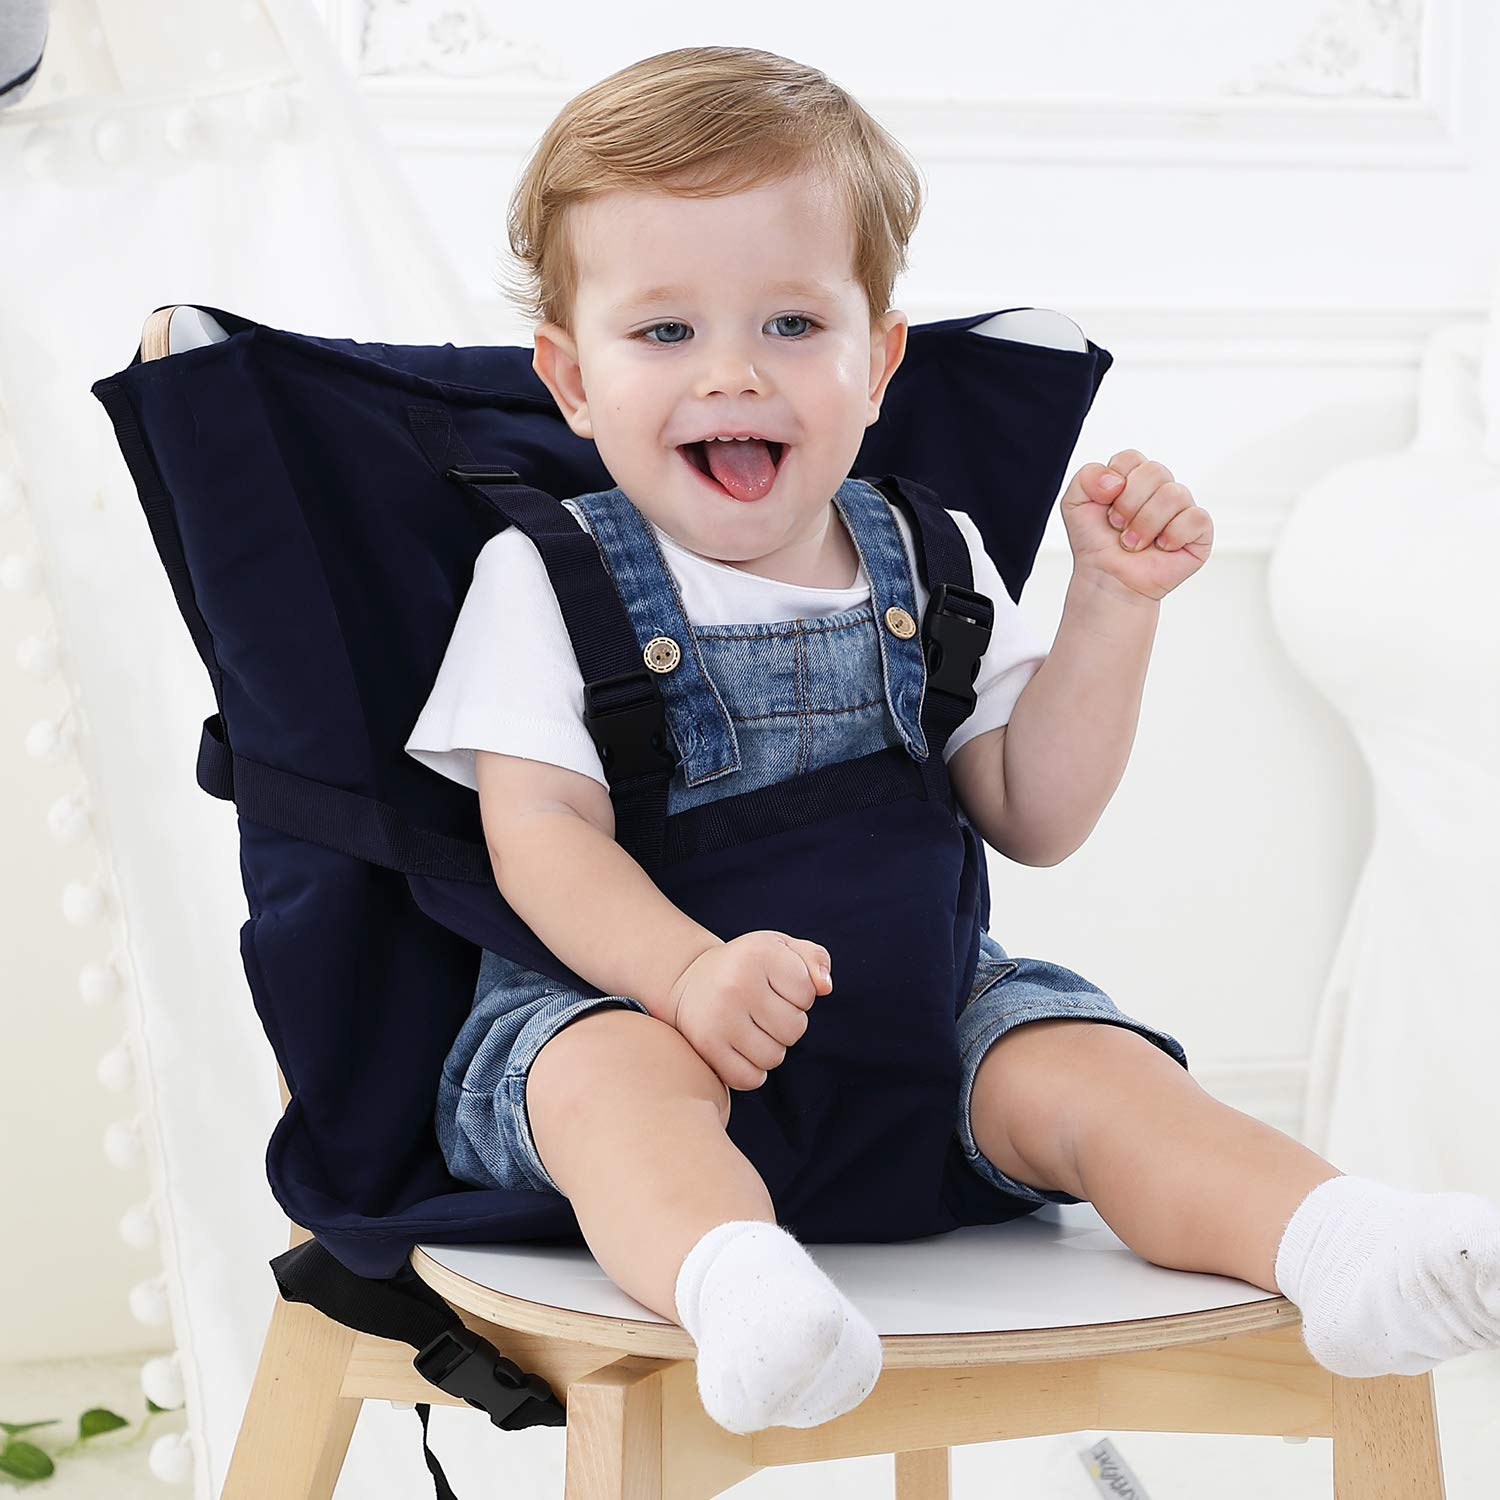 Baby chair safety belt